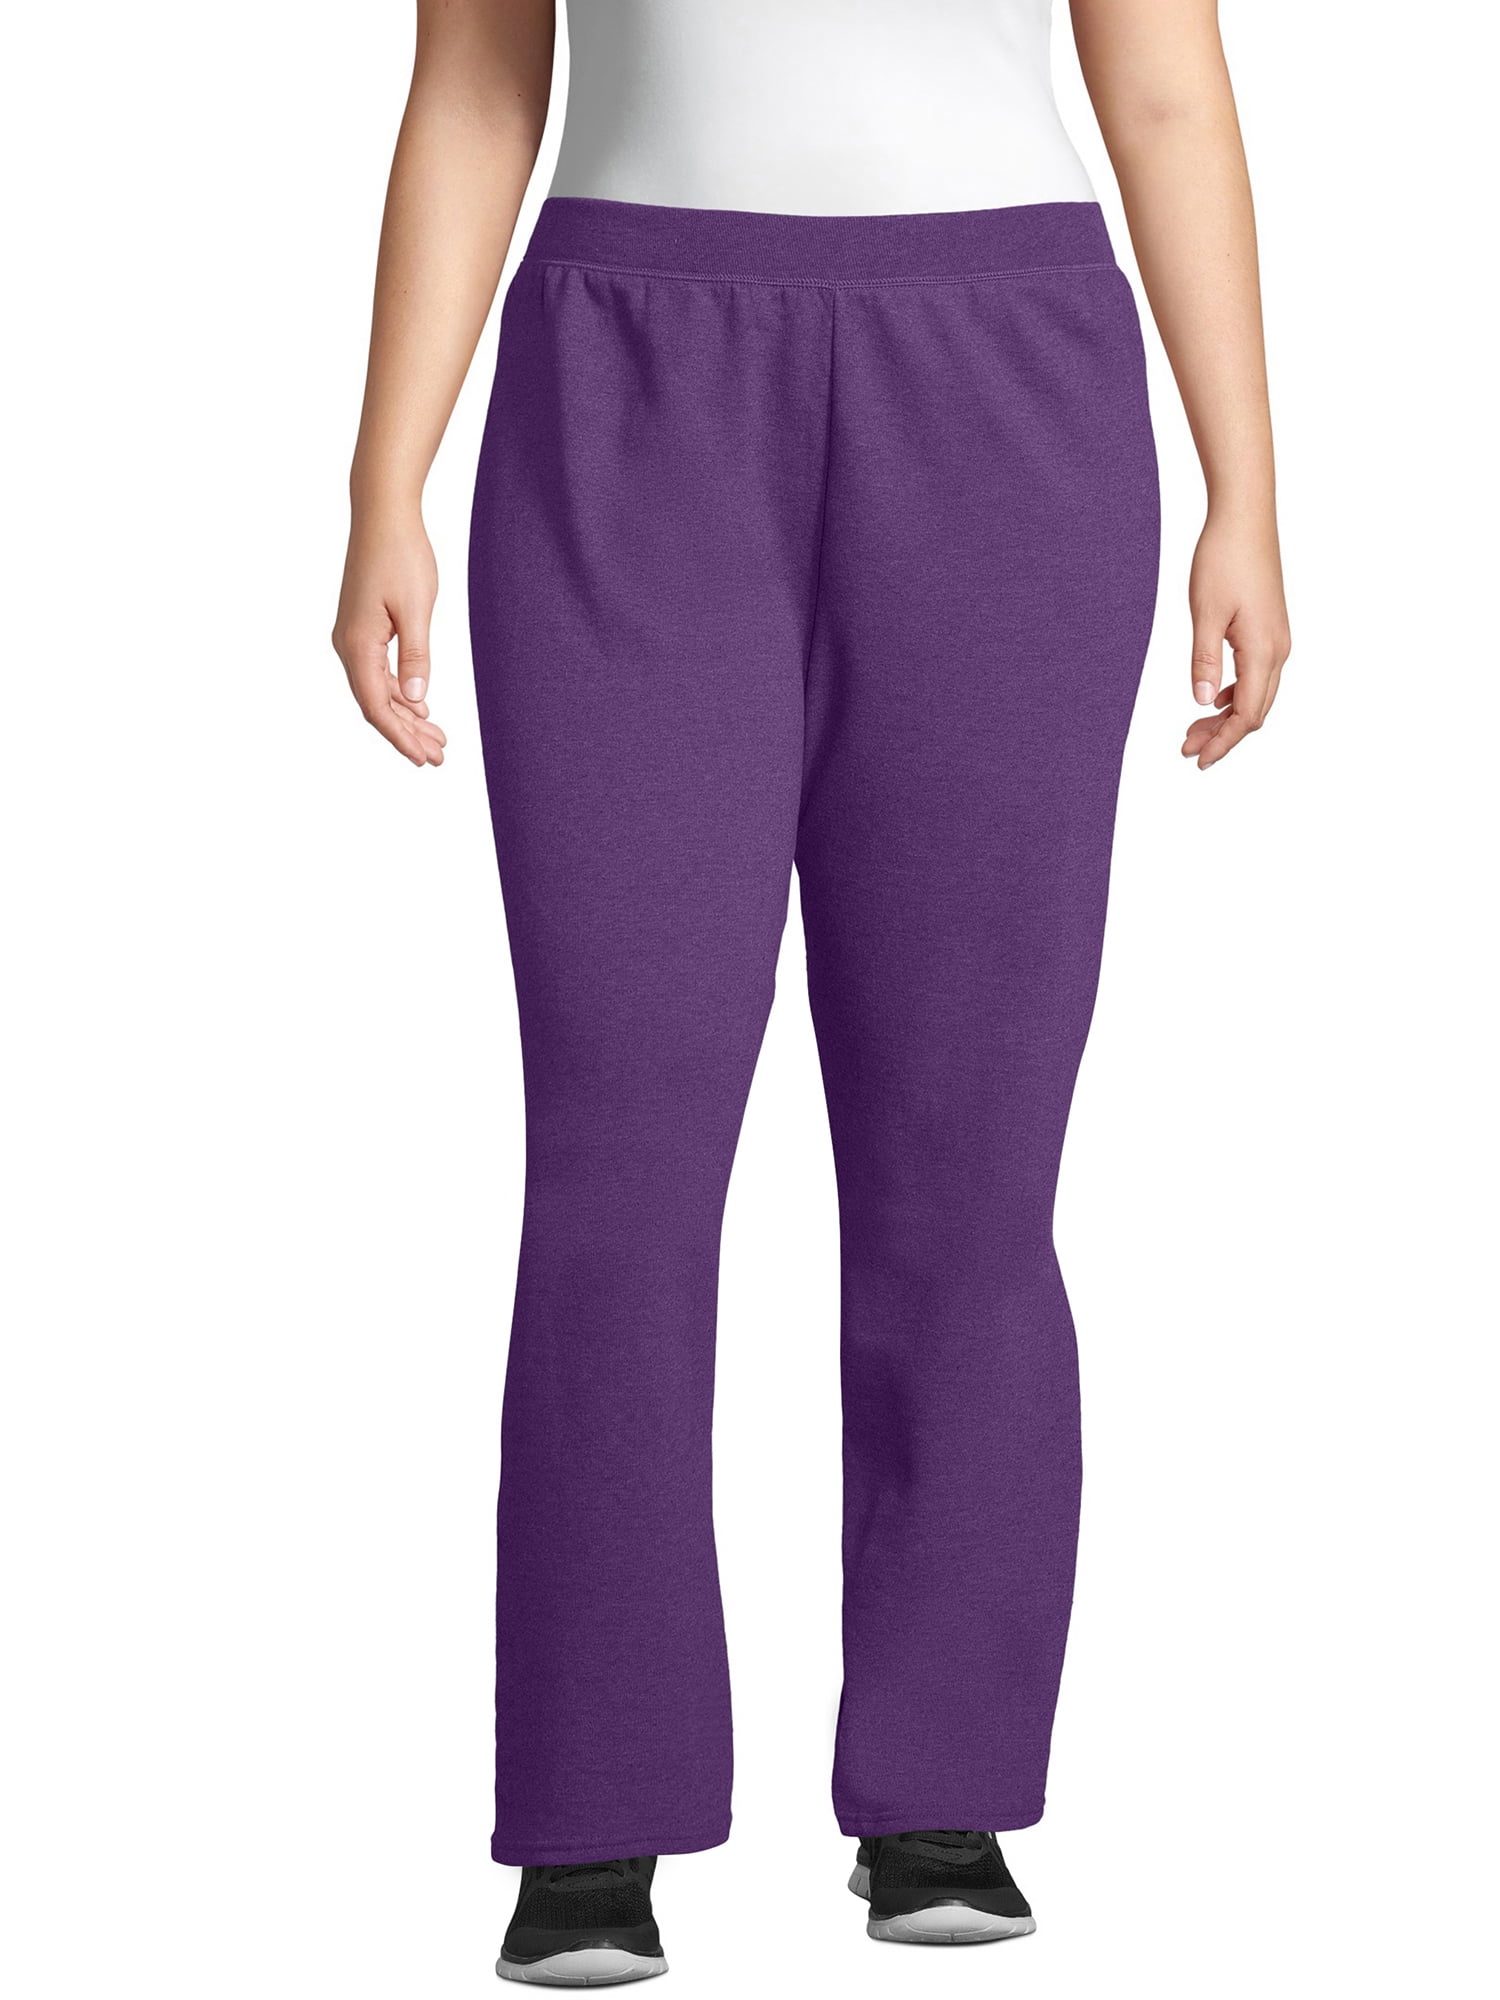 Hanes Women's Fleece Sweatpants 4-6 Small Petite, 8-10 M, 12-14 L, 16-18 XL